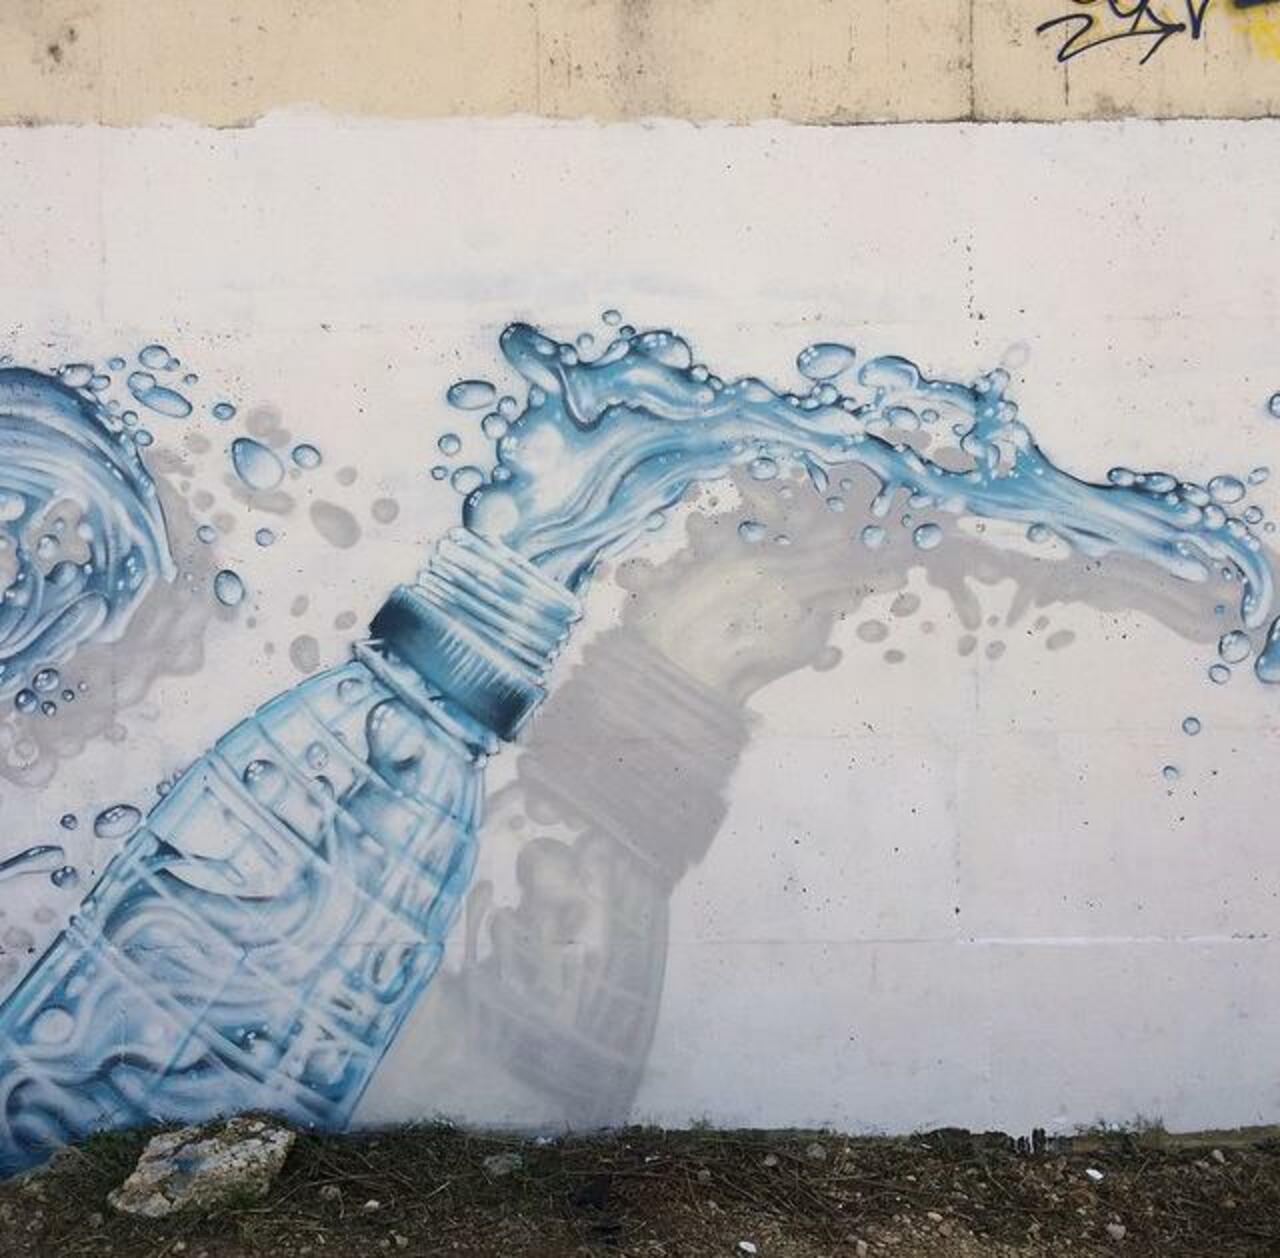 'Bottle'
Class new Street Art by JeazeOner 

#art #arte #graffiti #streetart http://t.co/EpNHNGQsgr